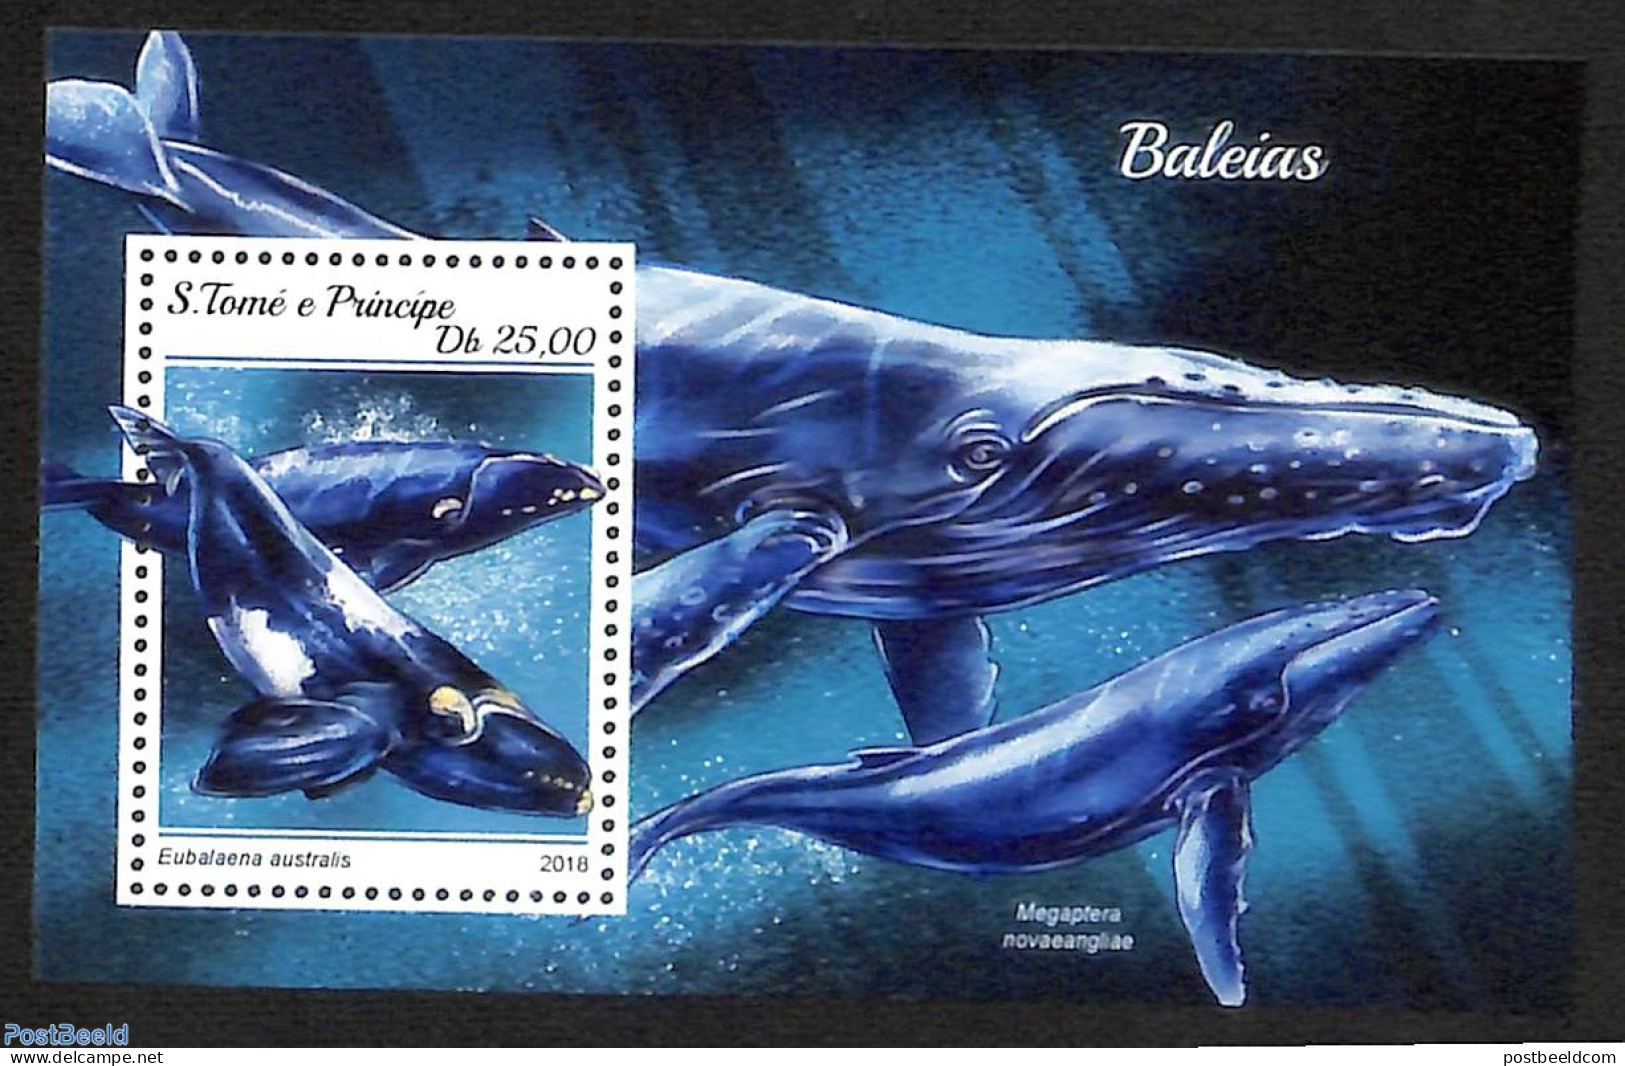 Sao Tome/Principe 2018 Whales, Mint NH, Nature - Sea Mammals - Sao Tome And Principe